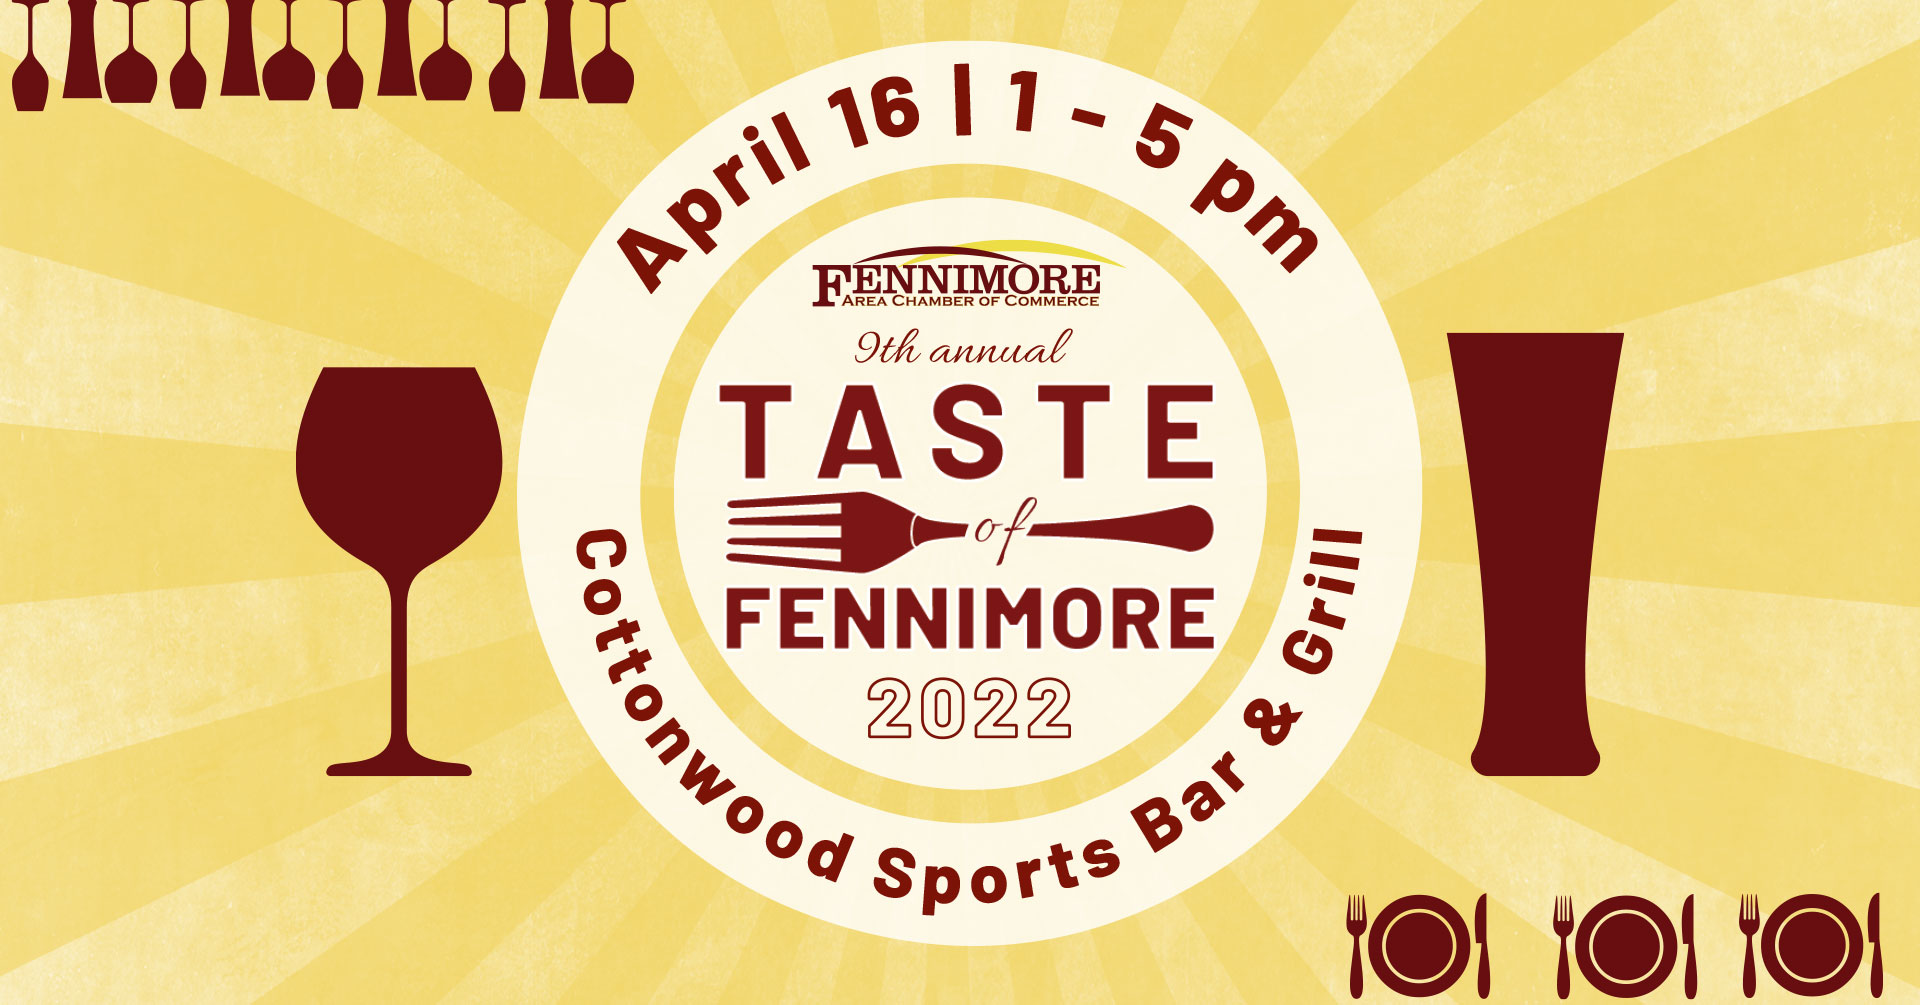 Taste-of-Fennimore-in-Fennimore-Wisconsin-April-16-2022